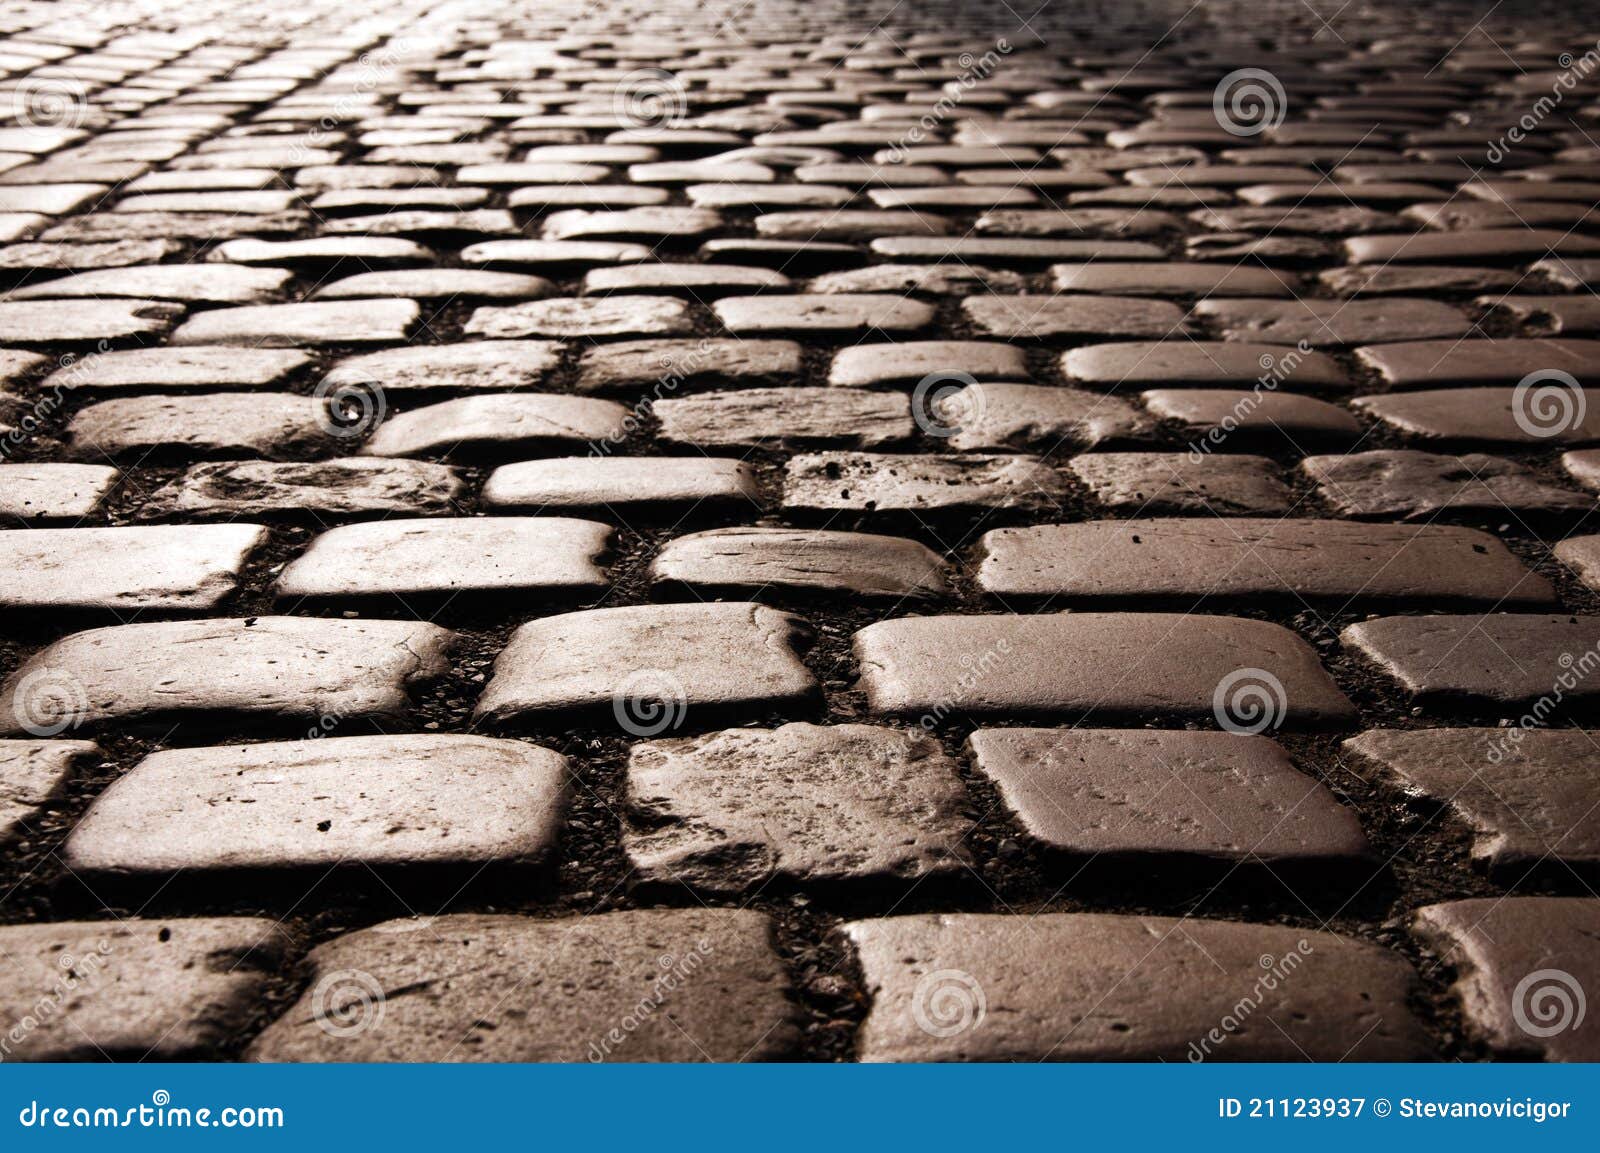 cobble stone road